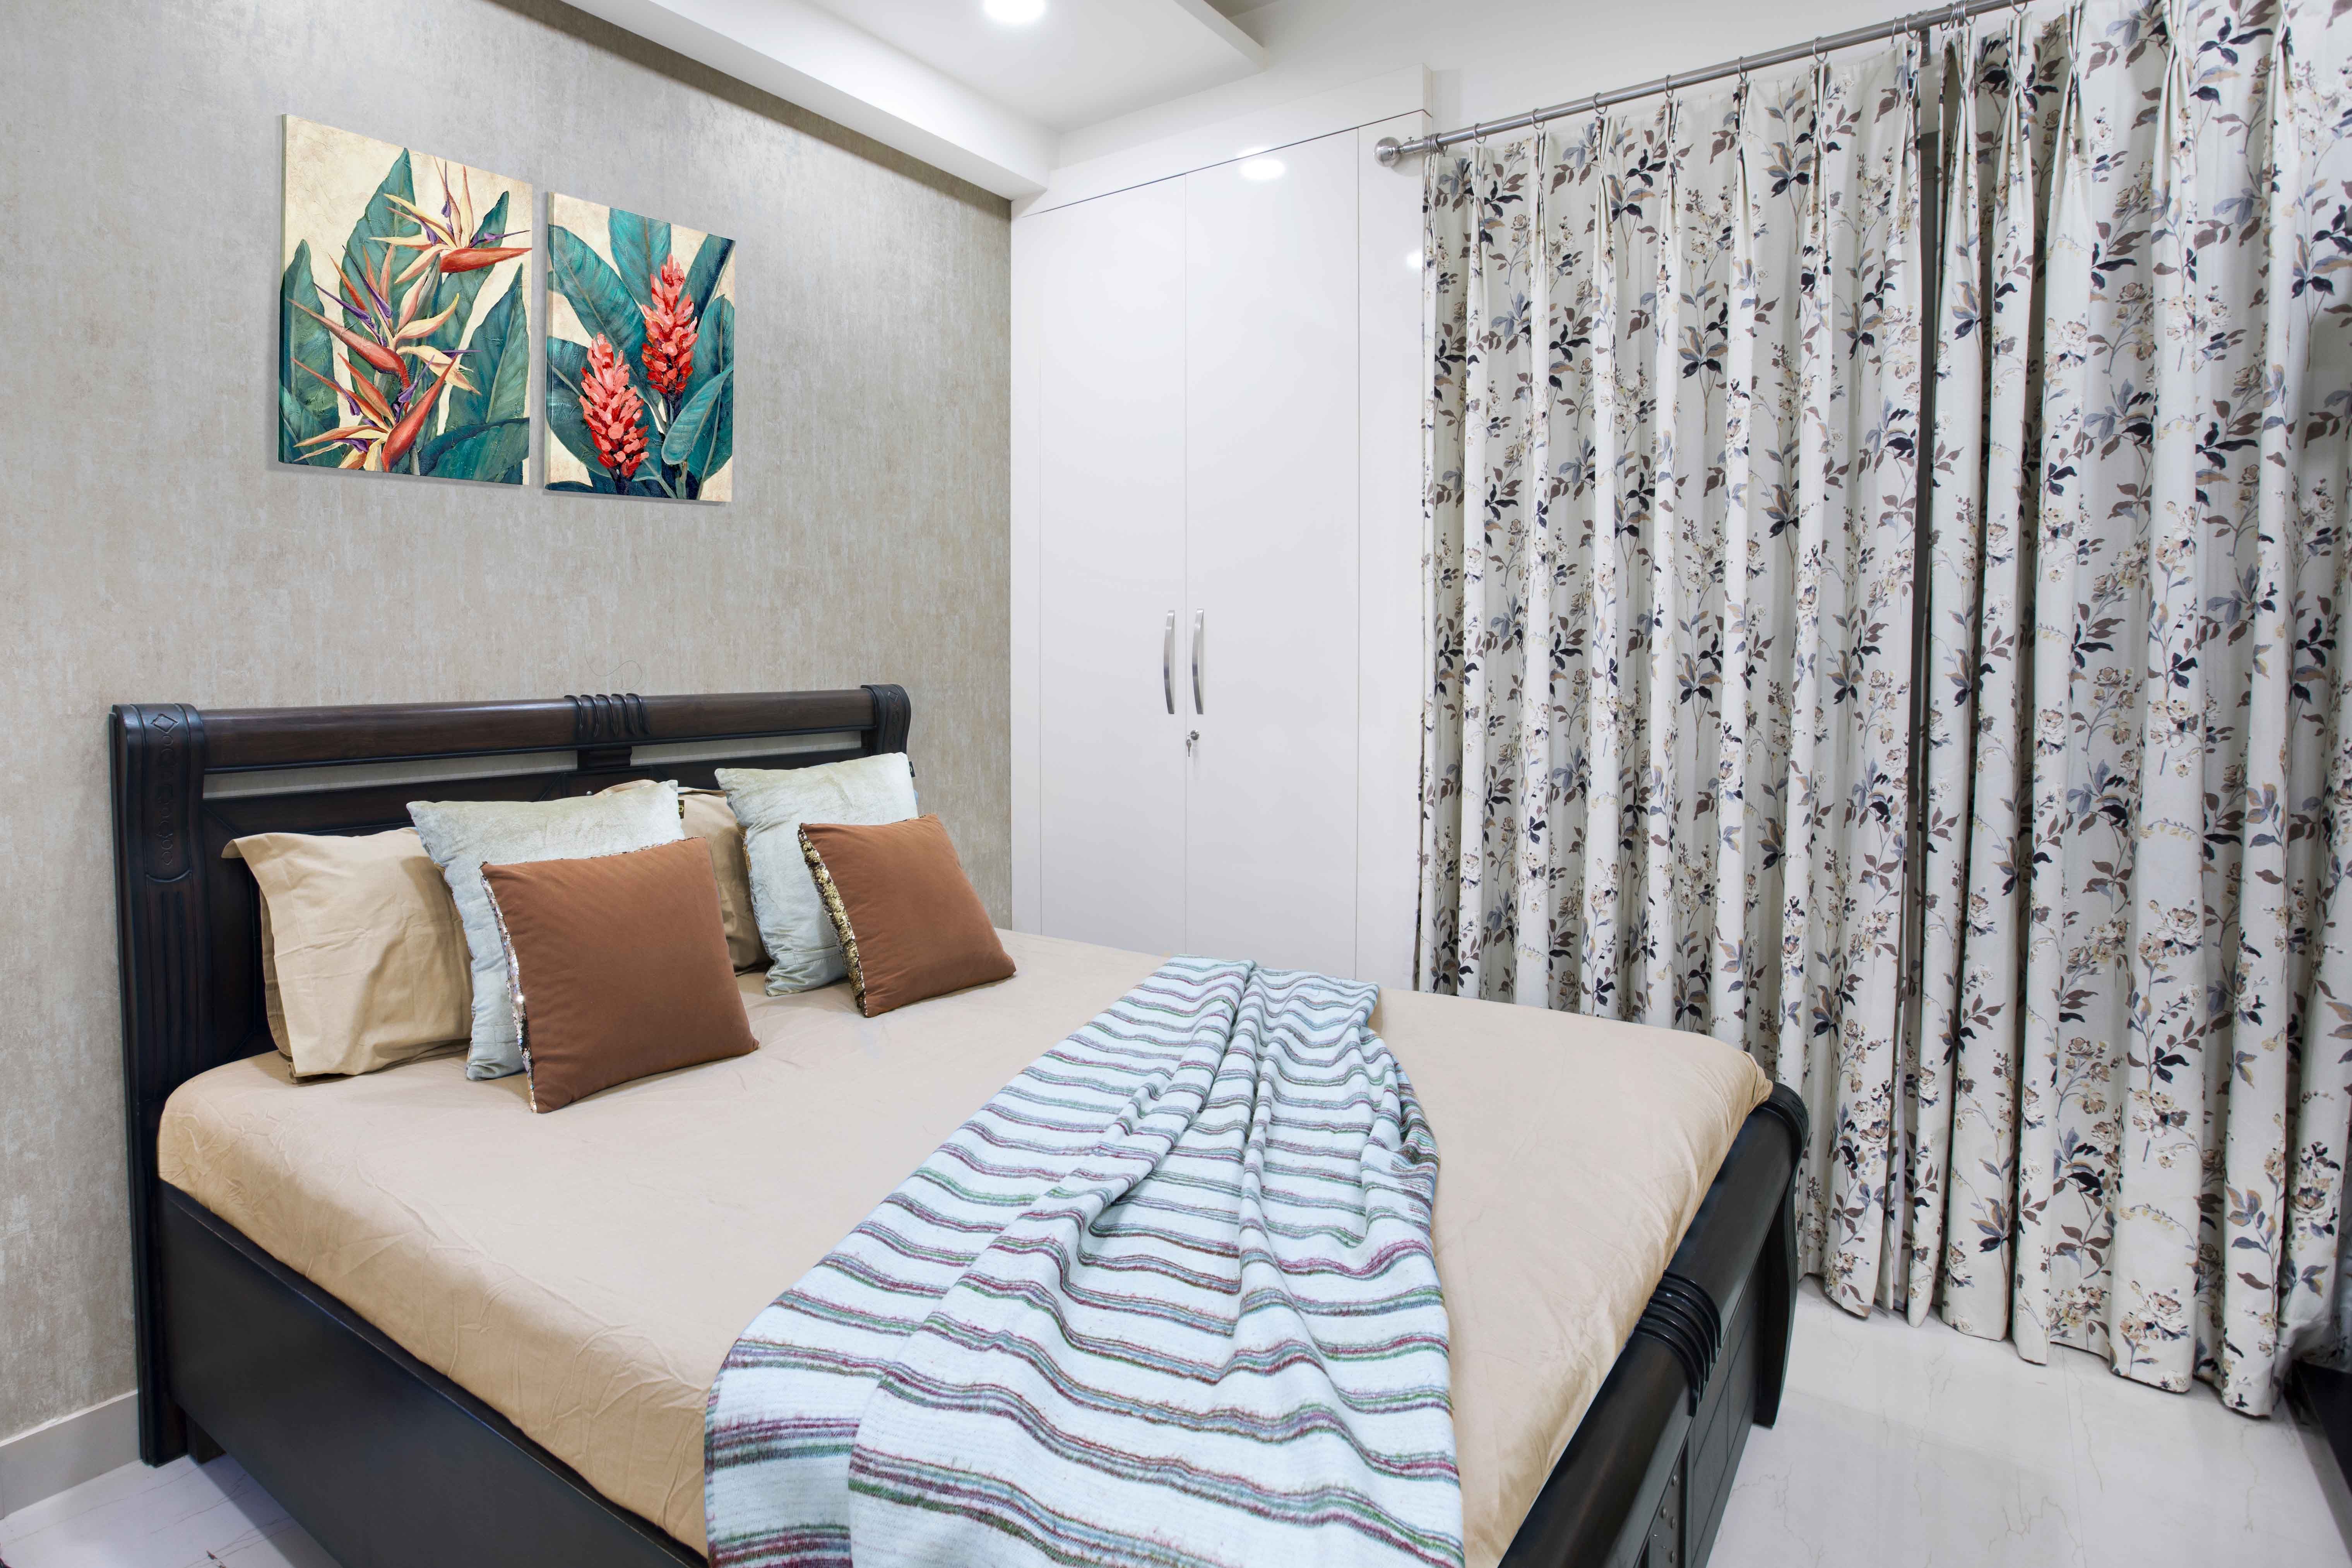 Classic Guest Room Design With Beige Textured Wallpaper